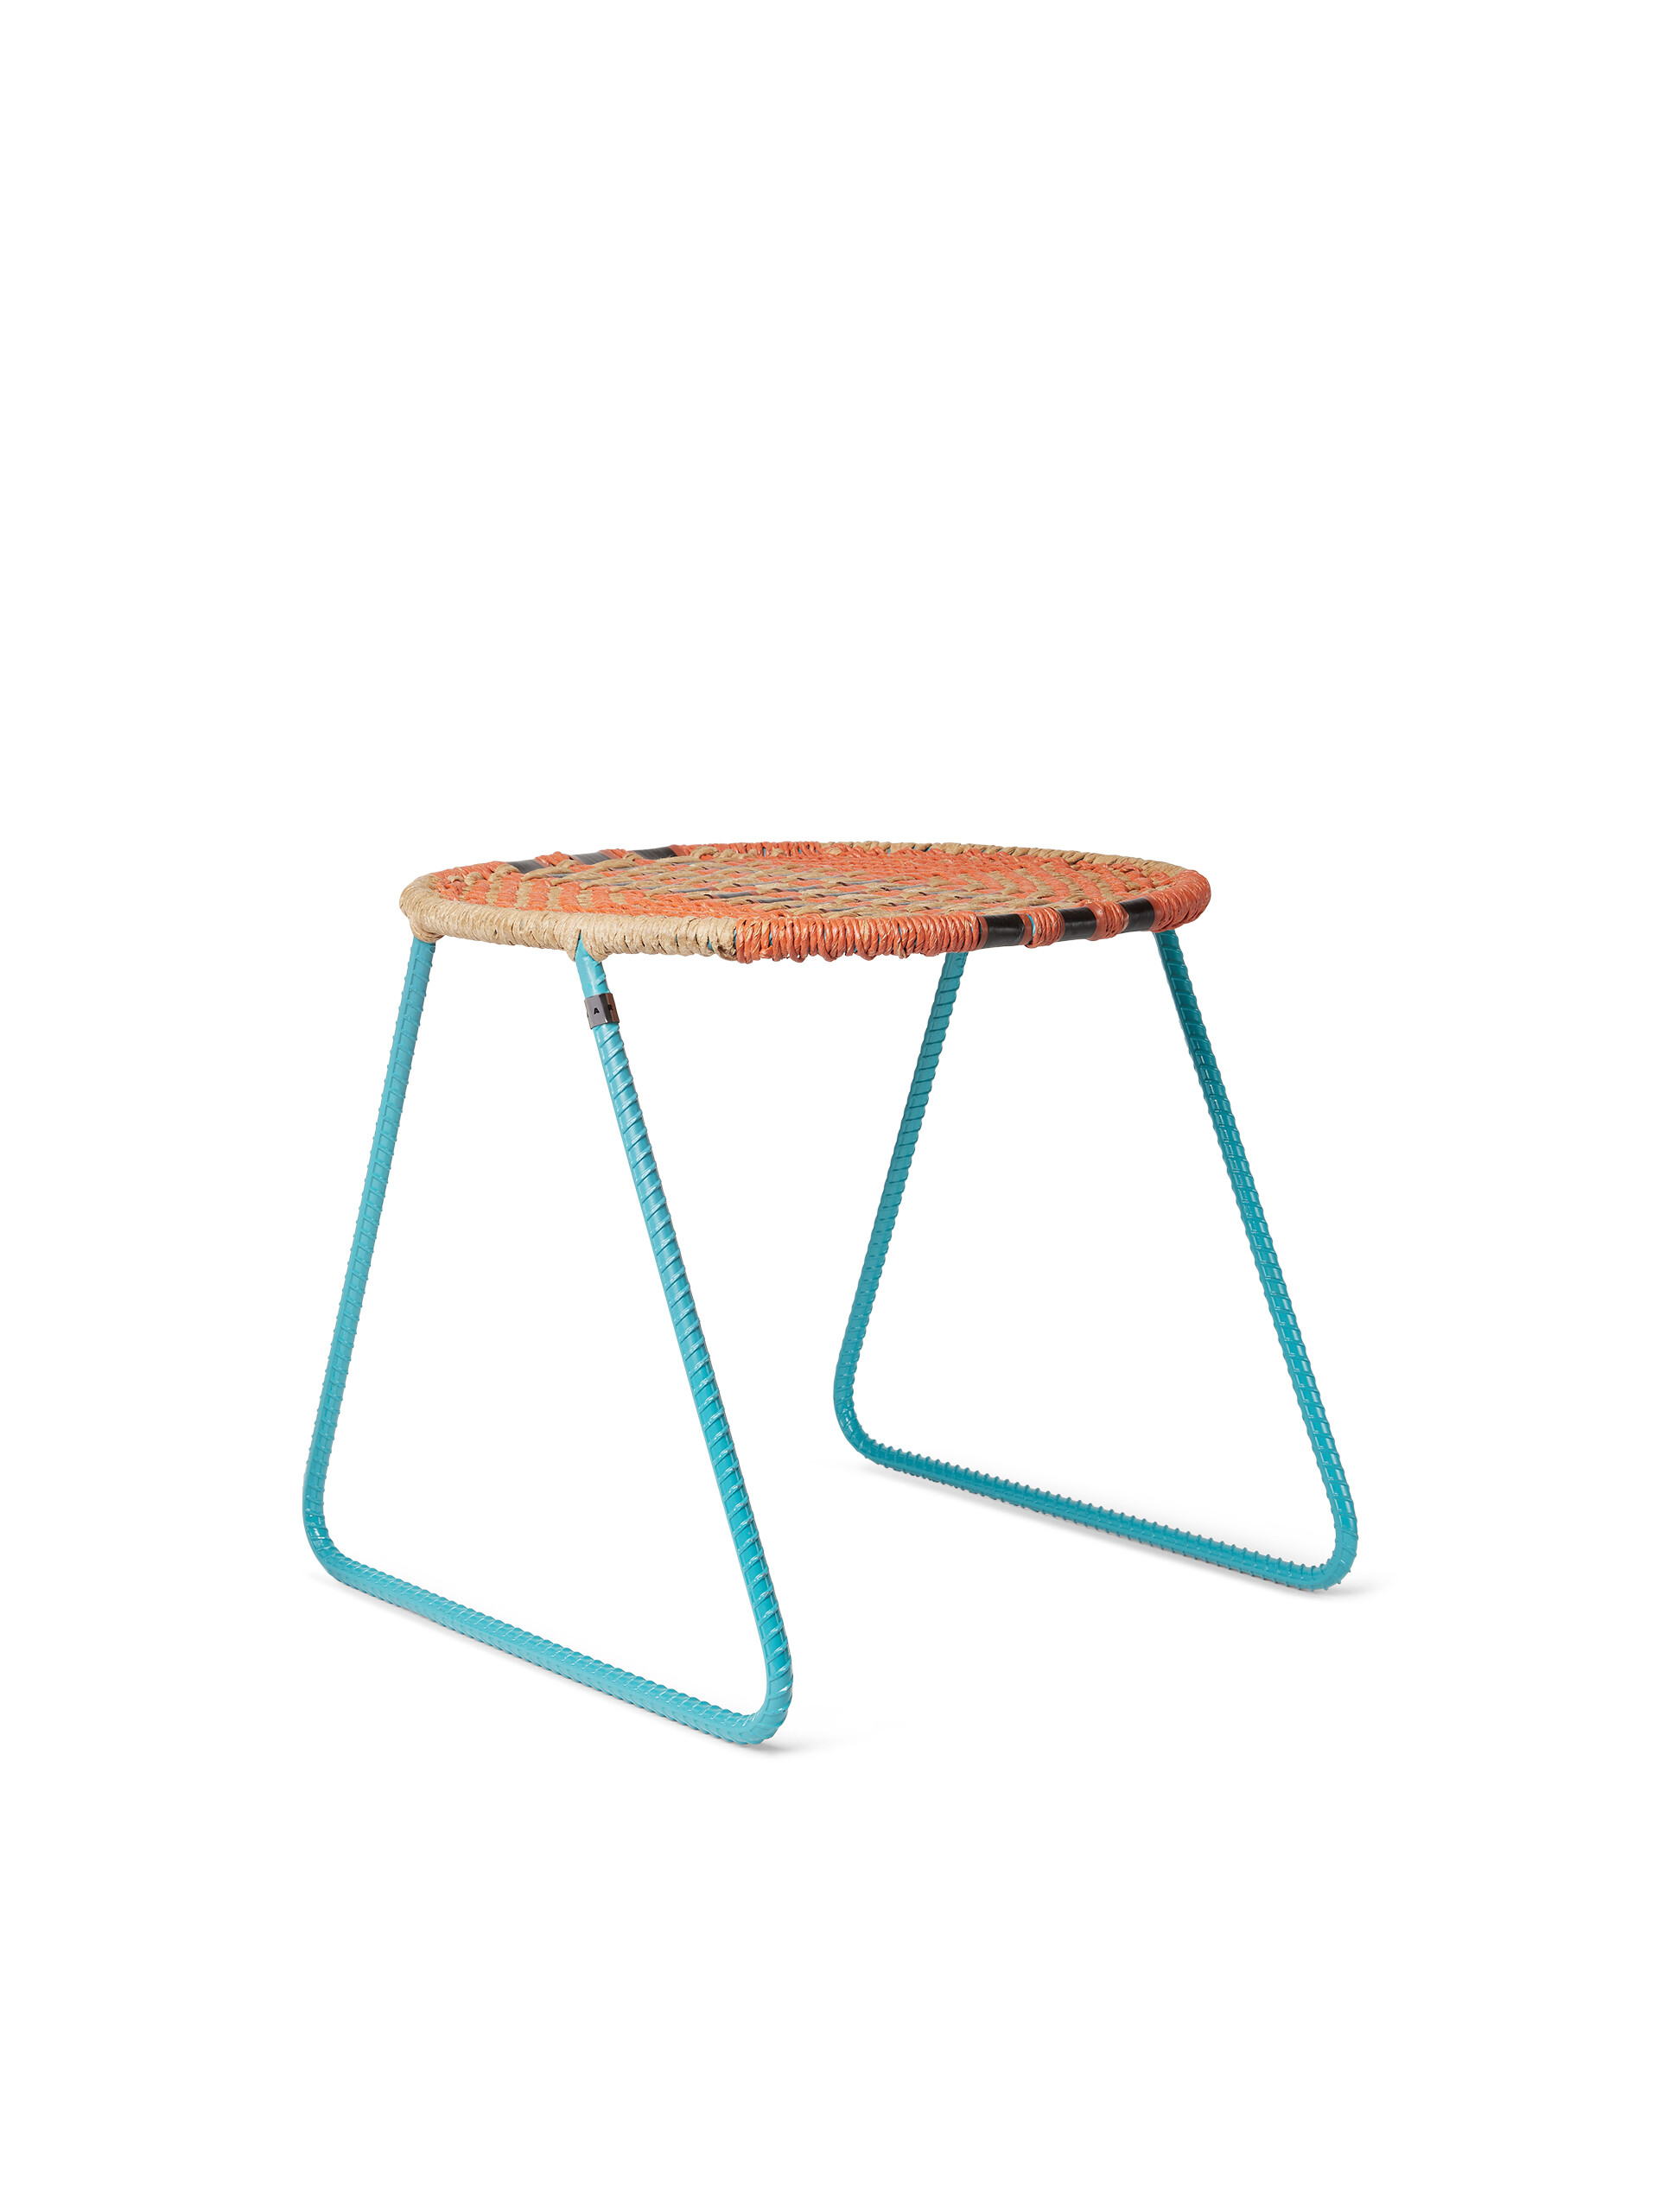 MARNI MARKET orange stool-table - Furniture - Image 2